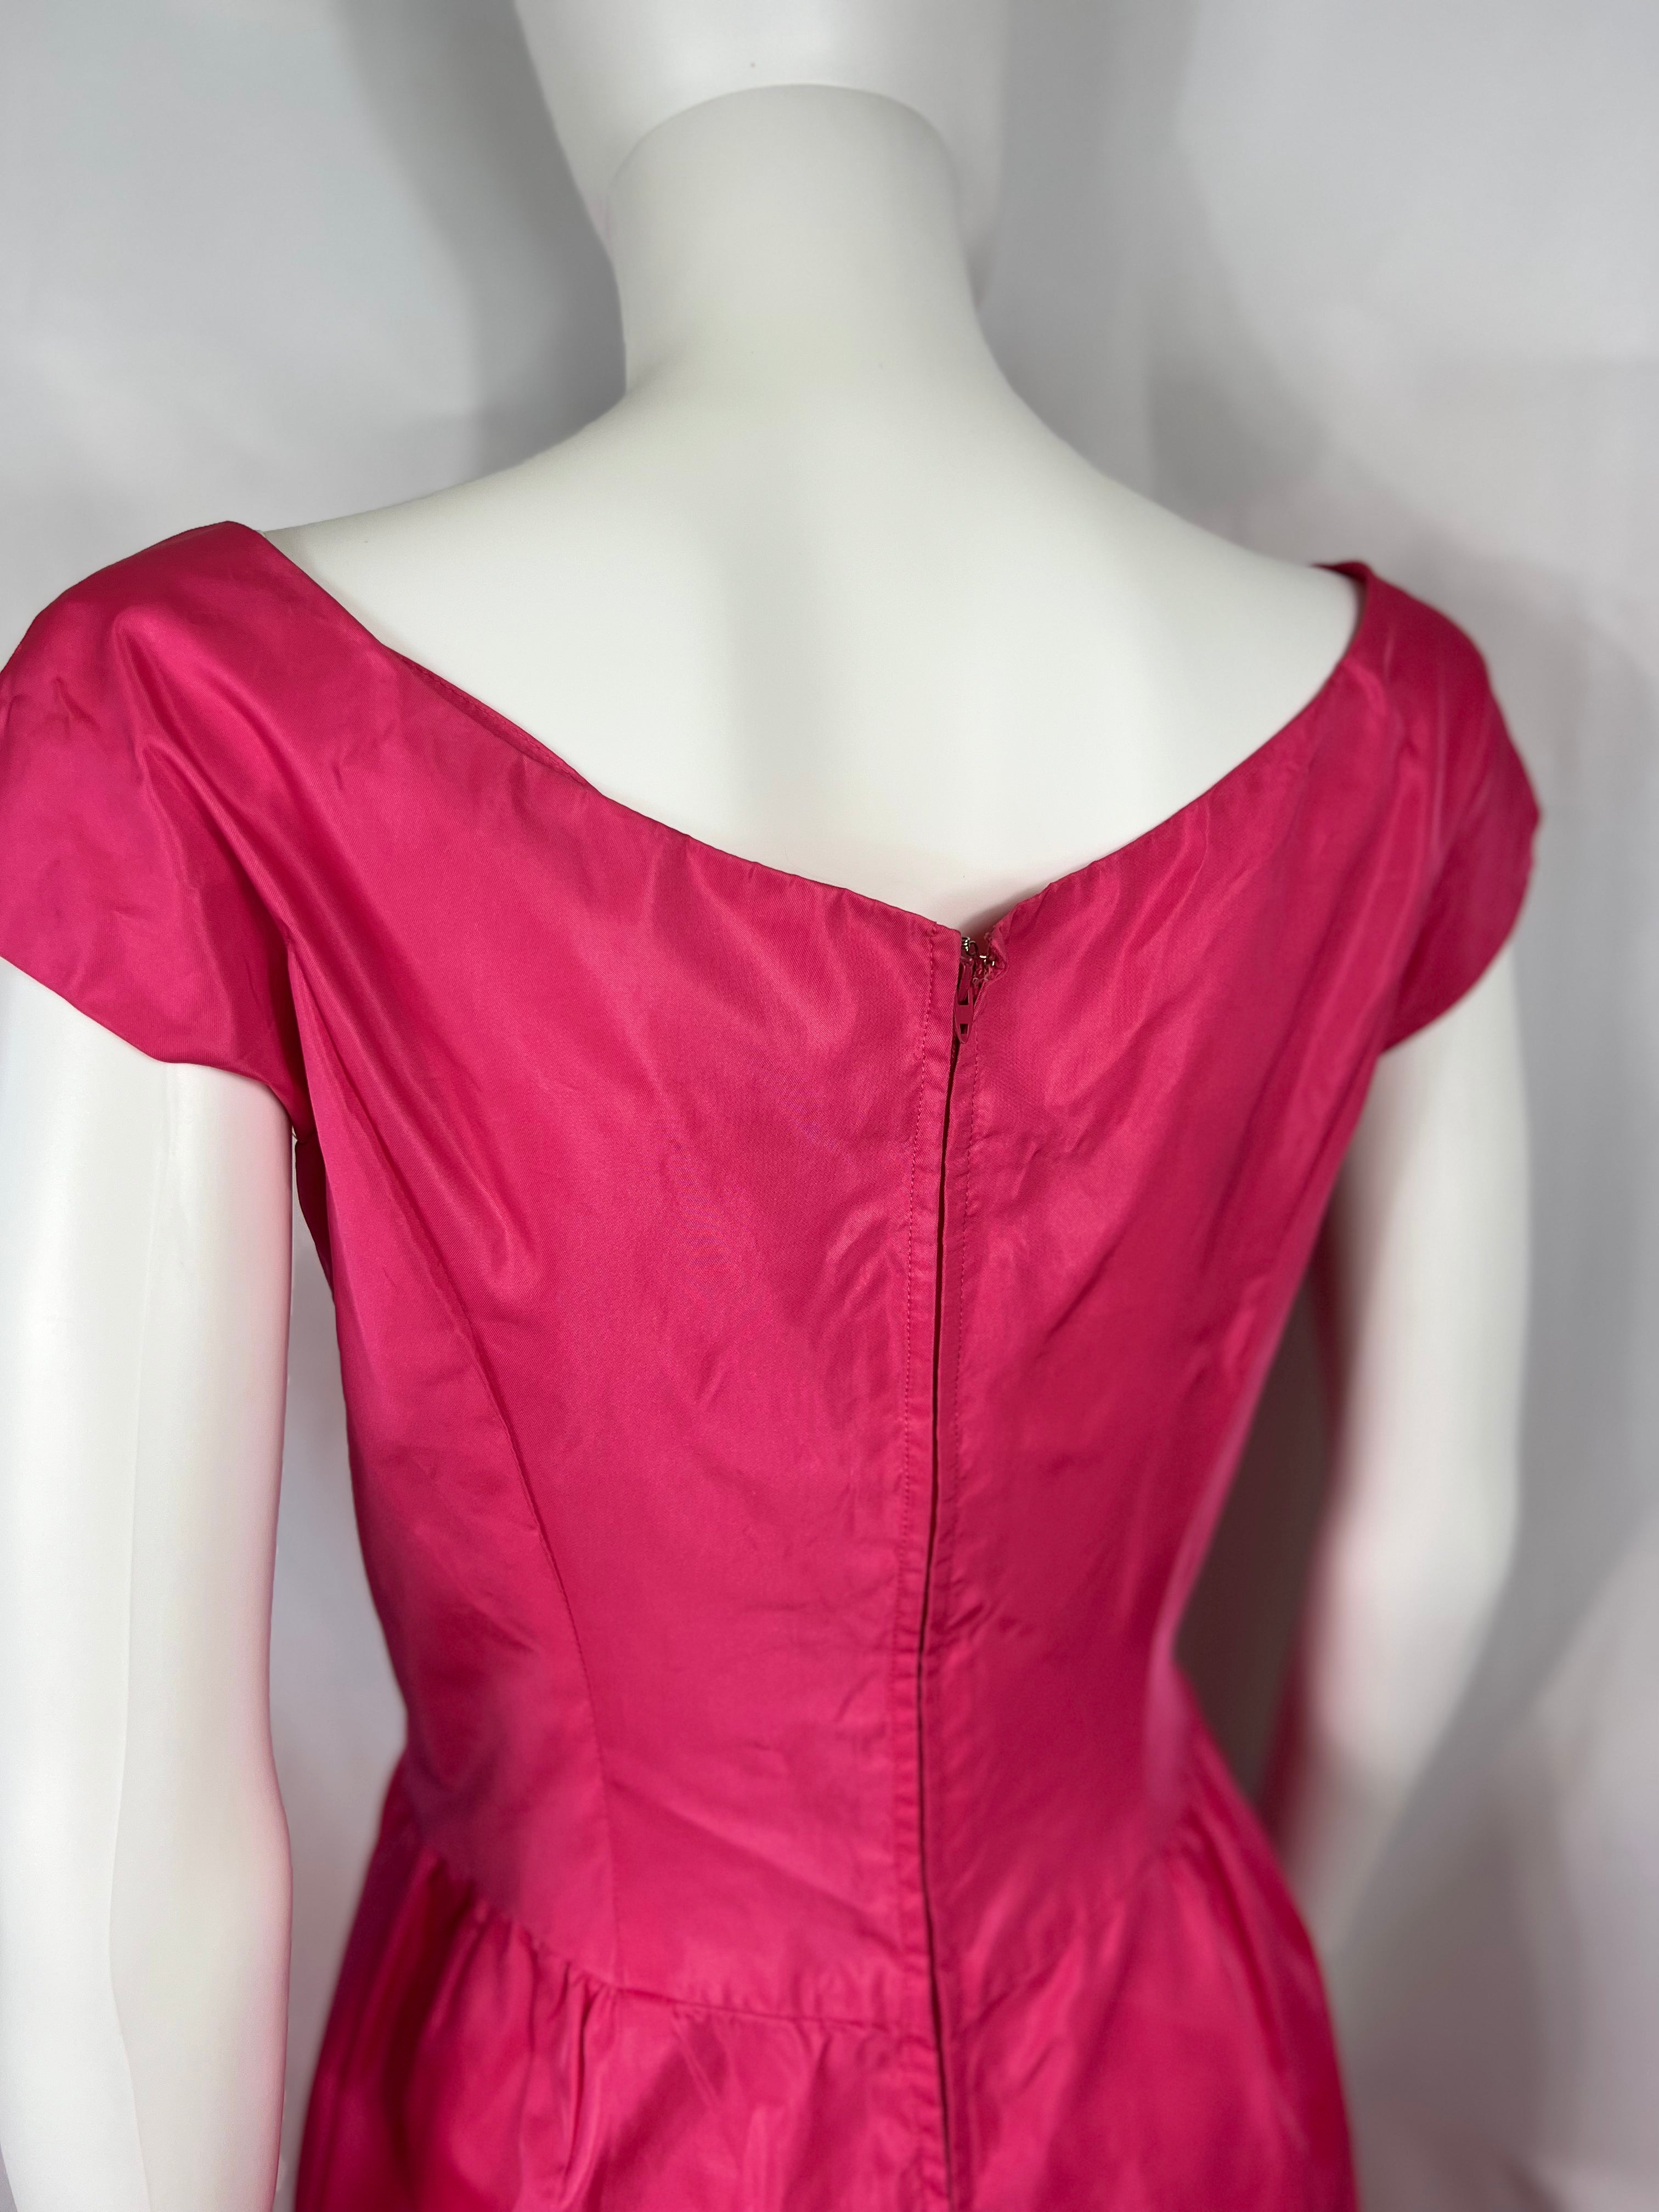 1950's Hot Pink Cocktail Dress Lorrie Deb SF